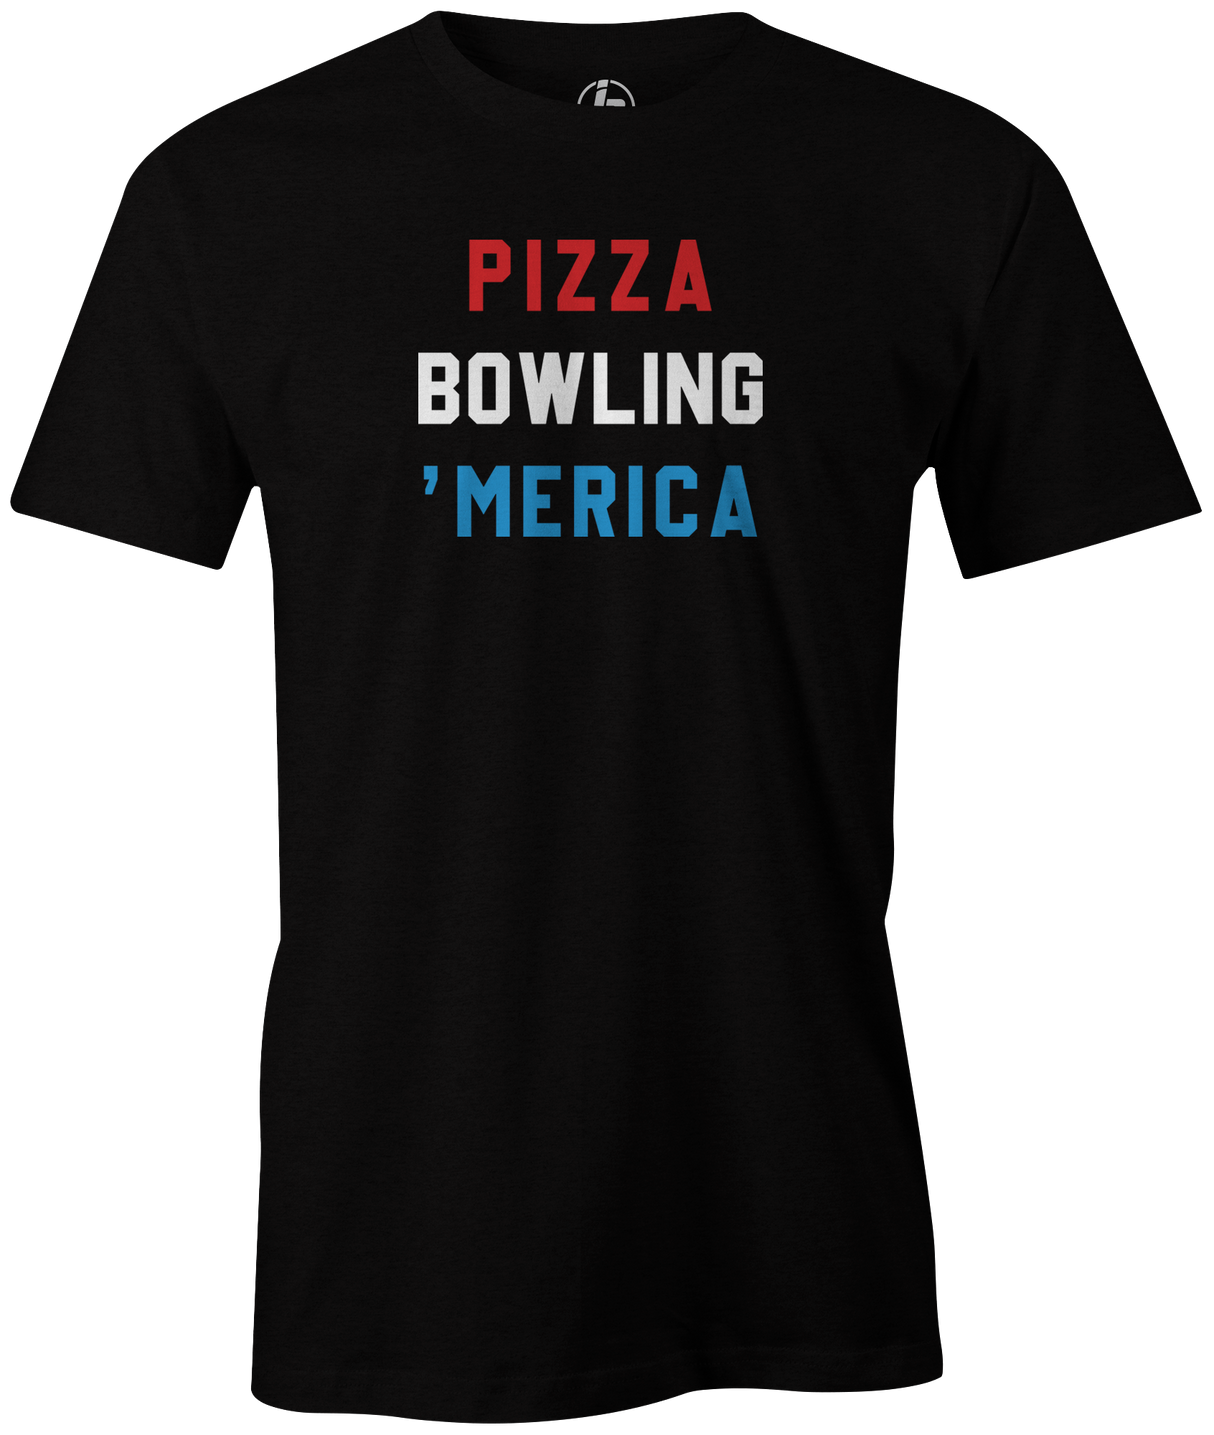 Pizza Bowling 'Merica Men's Bowling shirt, black, tee, tee-shirt, tee shirt, apparel, merch, cool, funny, vintage, gift, present, cheap, discount, free shipping, lifestlye.